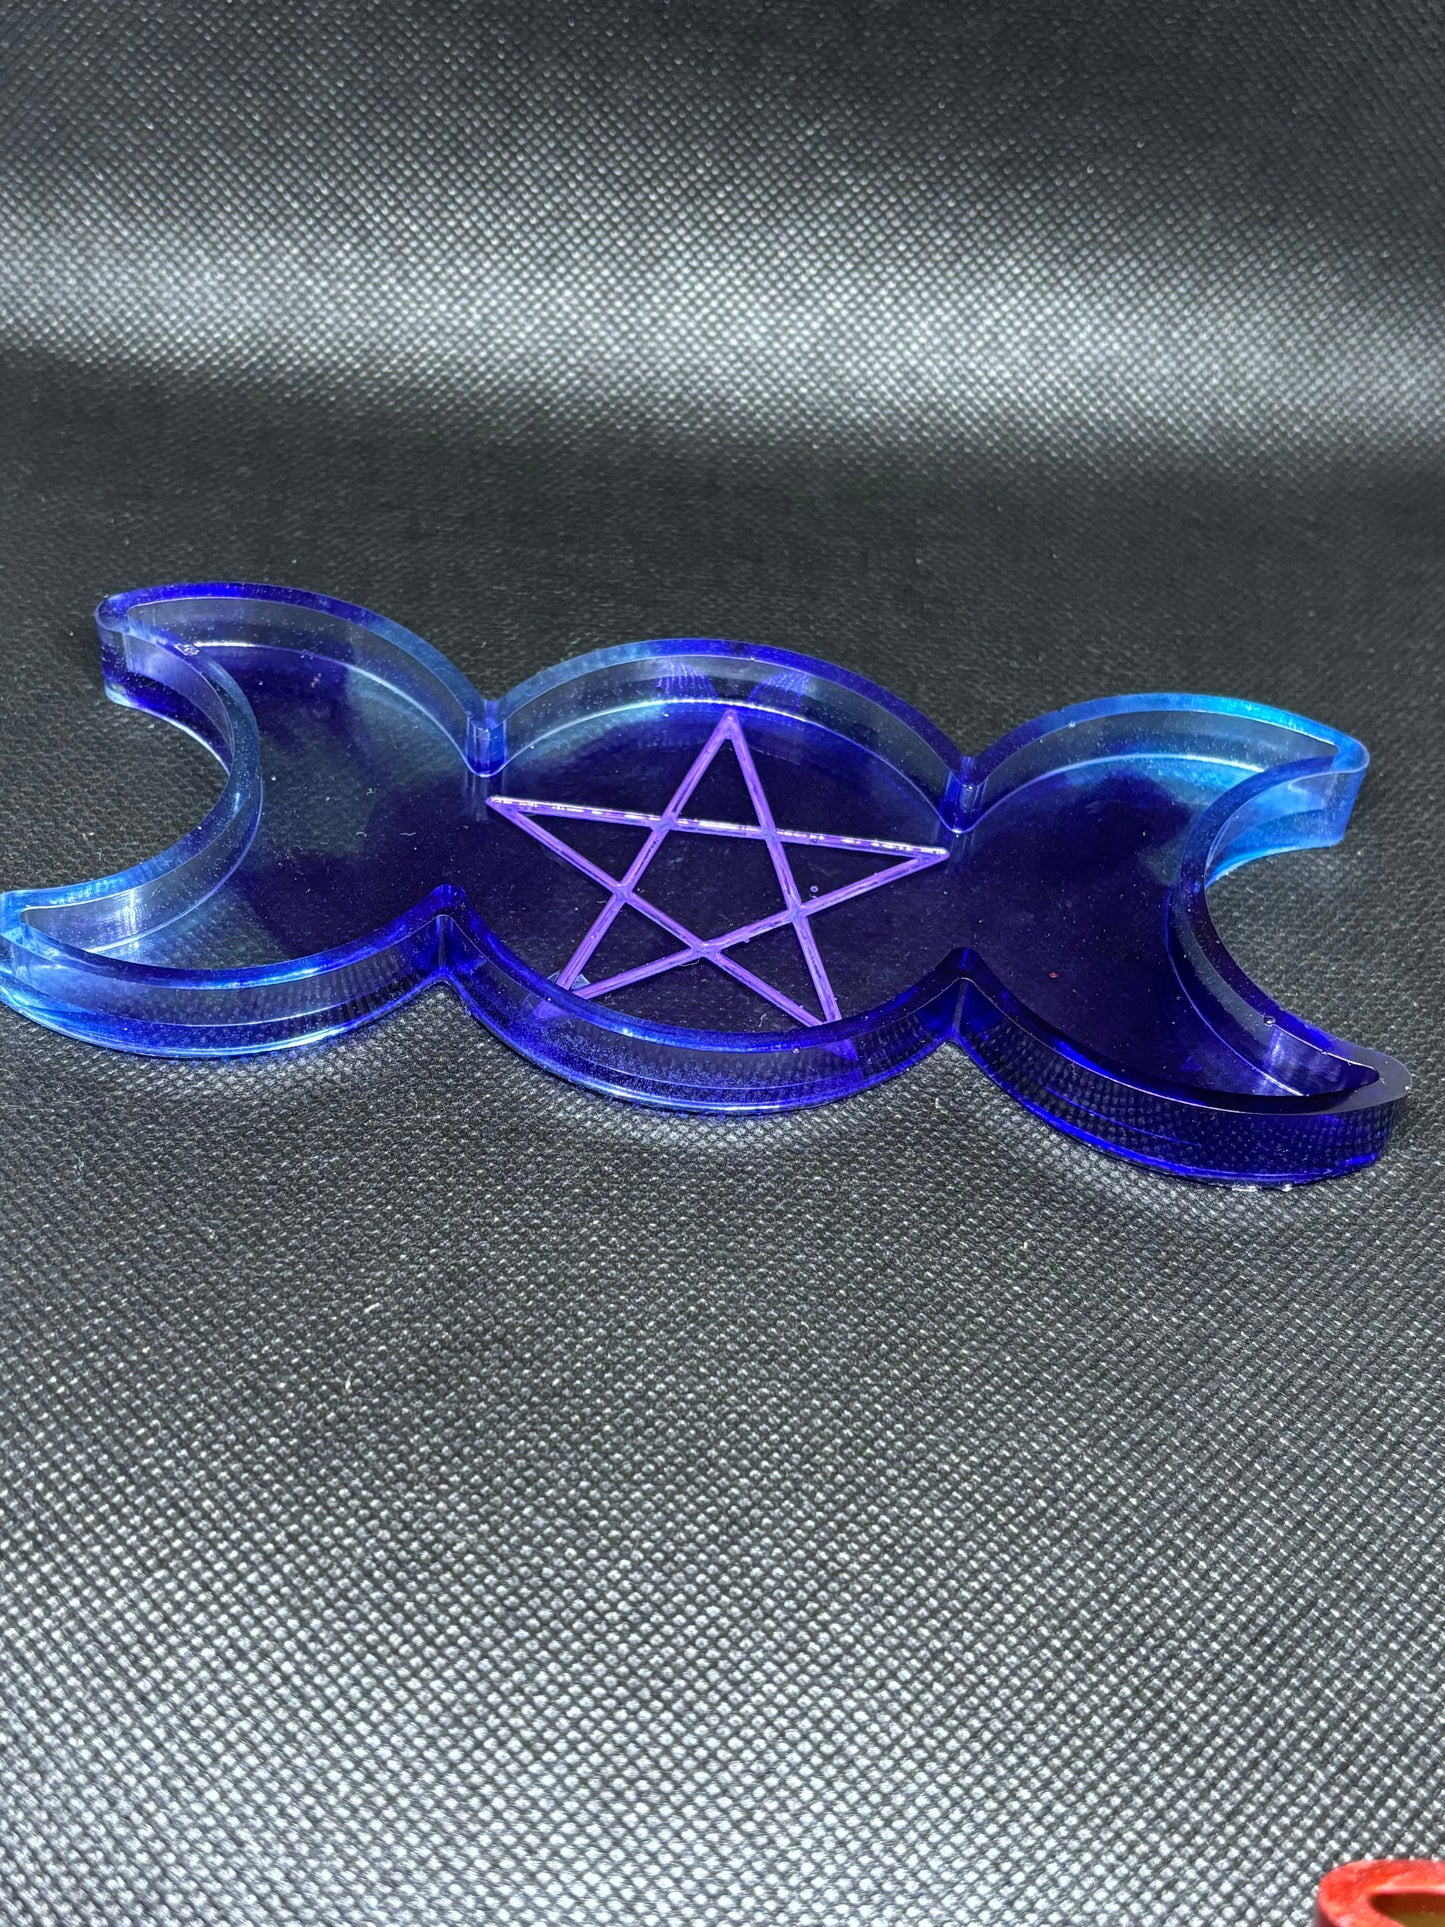 Pentacle Triple Moon Tray (Blue/Purple)